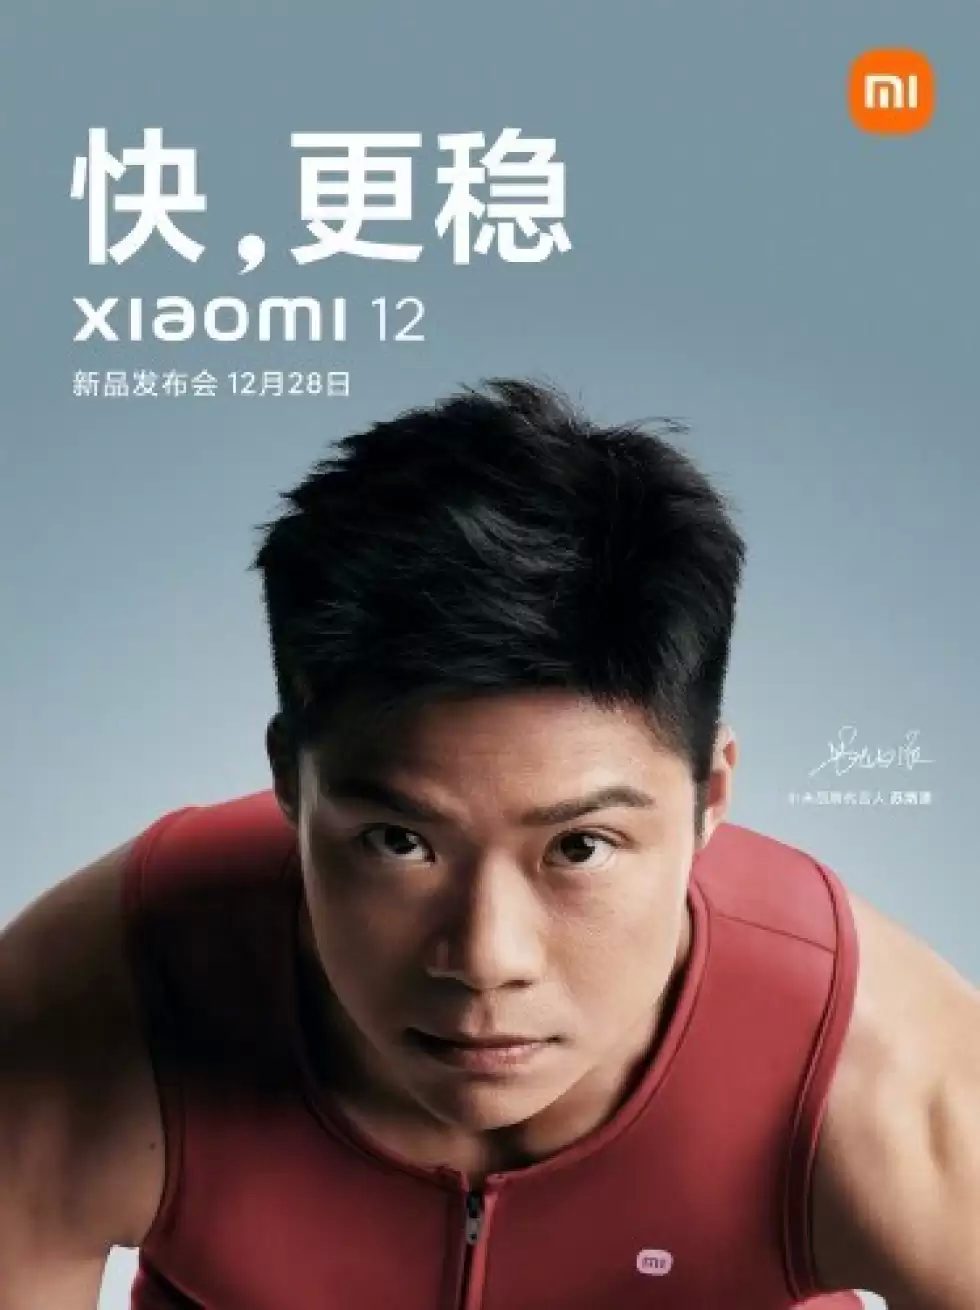 Xiaomi-12-poster